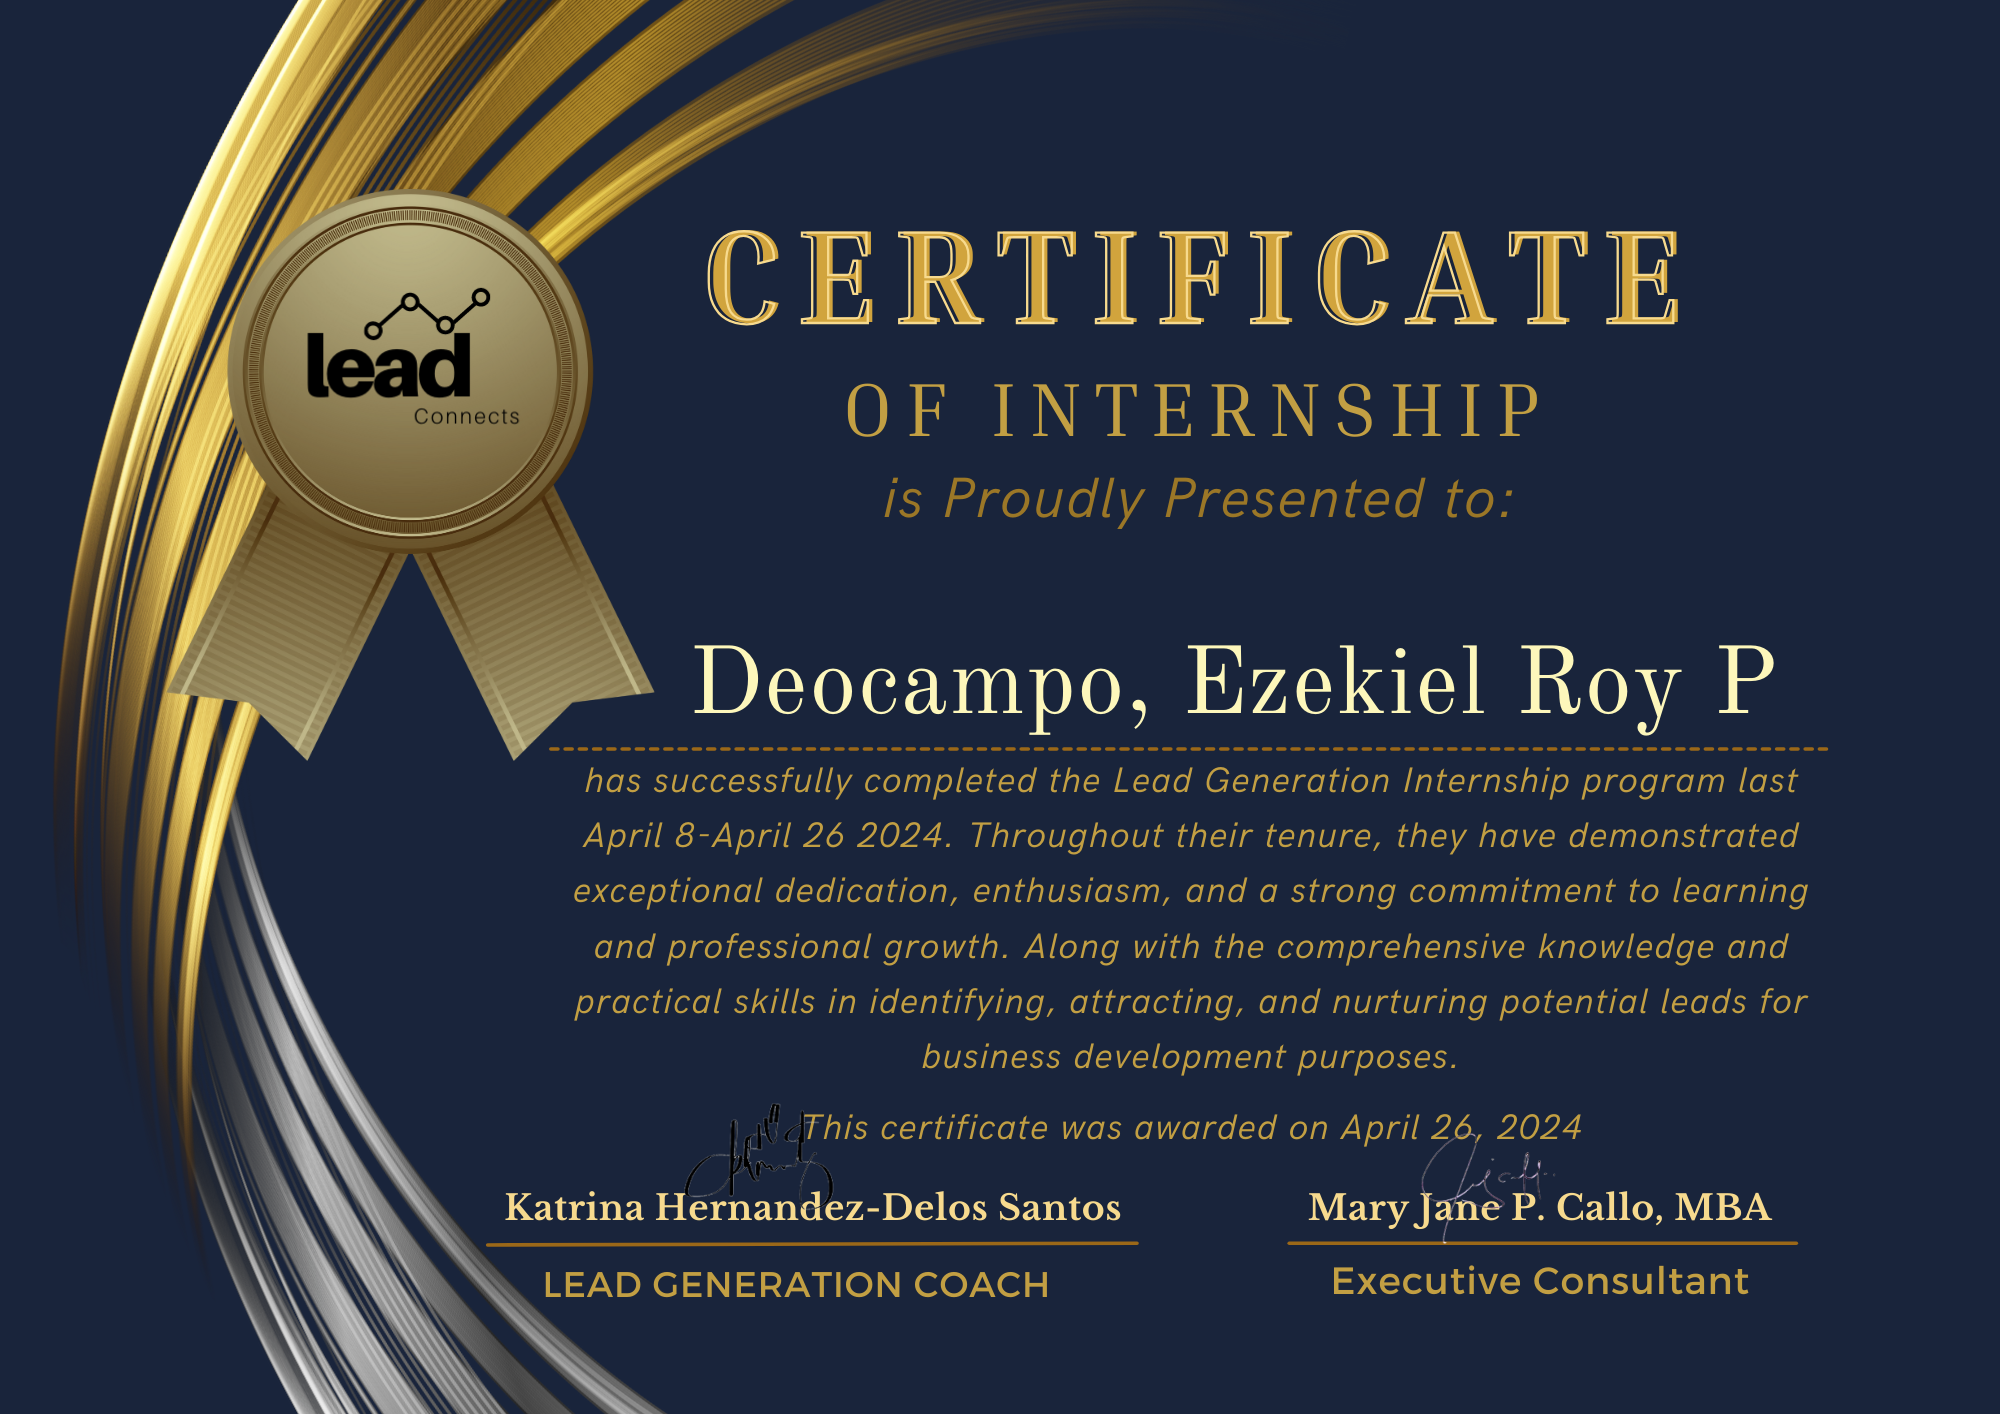 Lead Connect Internship